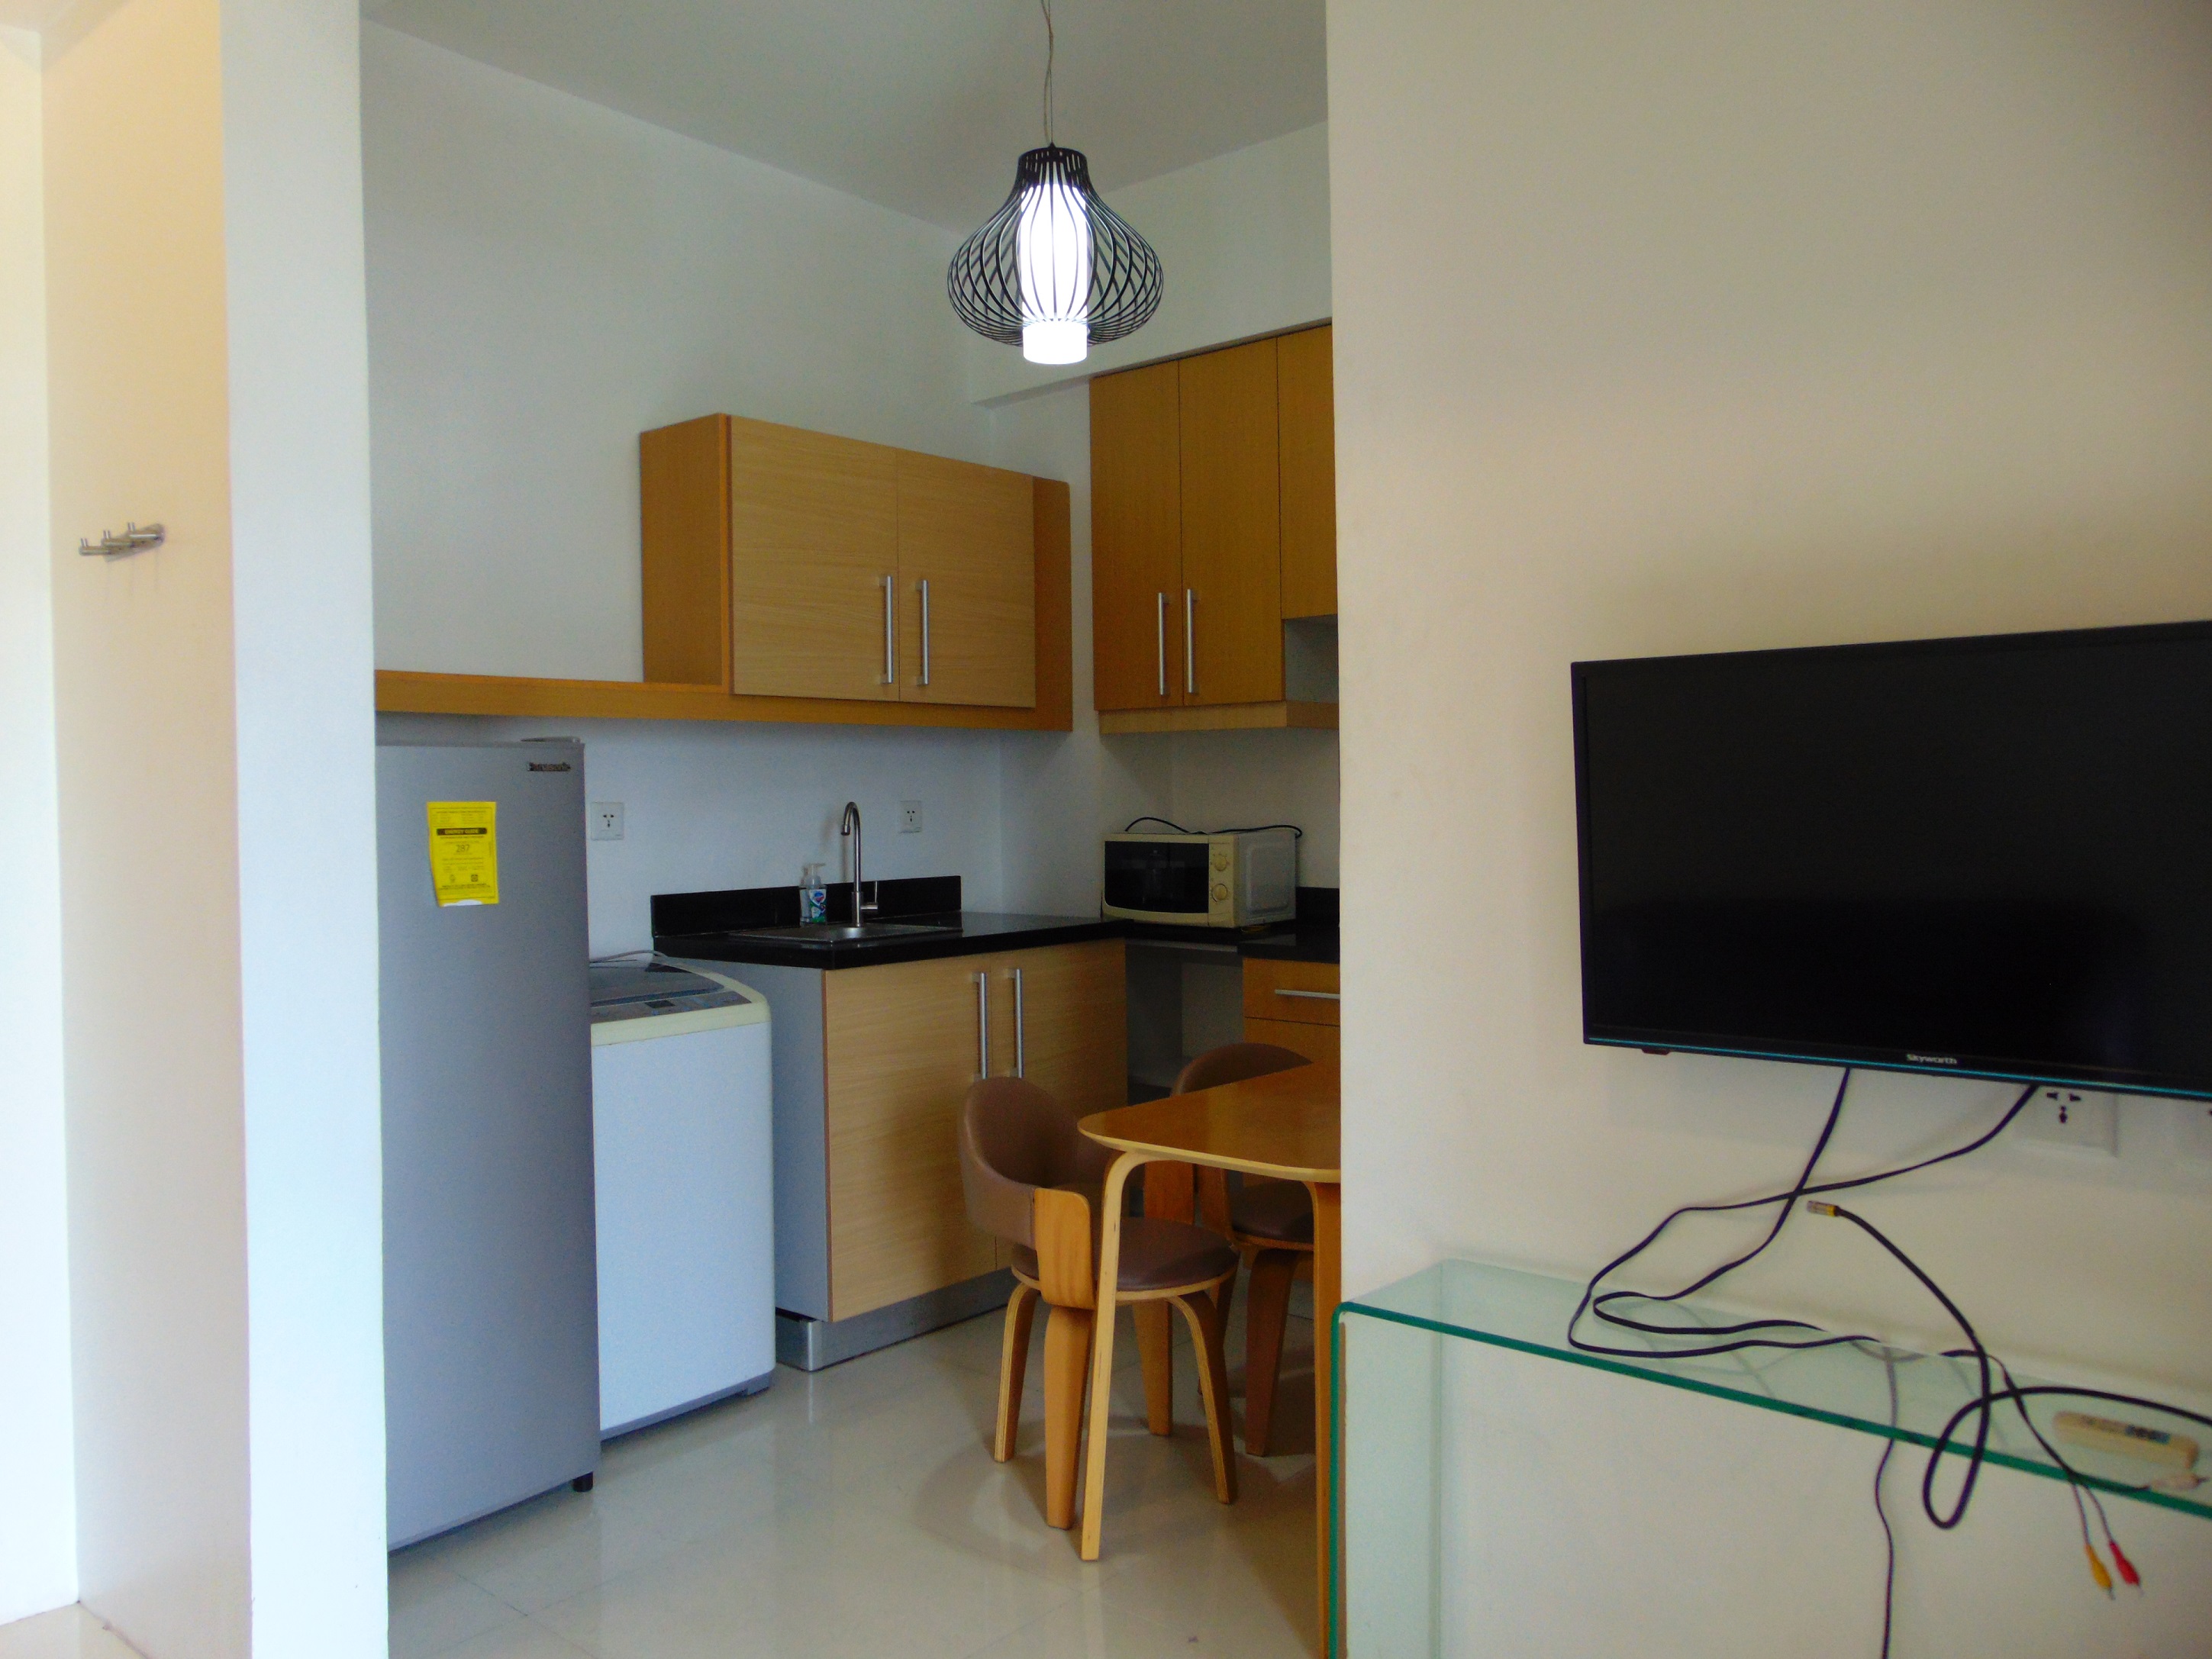 1-bedroom-condominium-furnished-located-in-mabolo-cebu-city